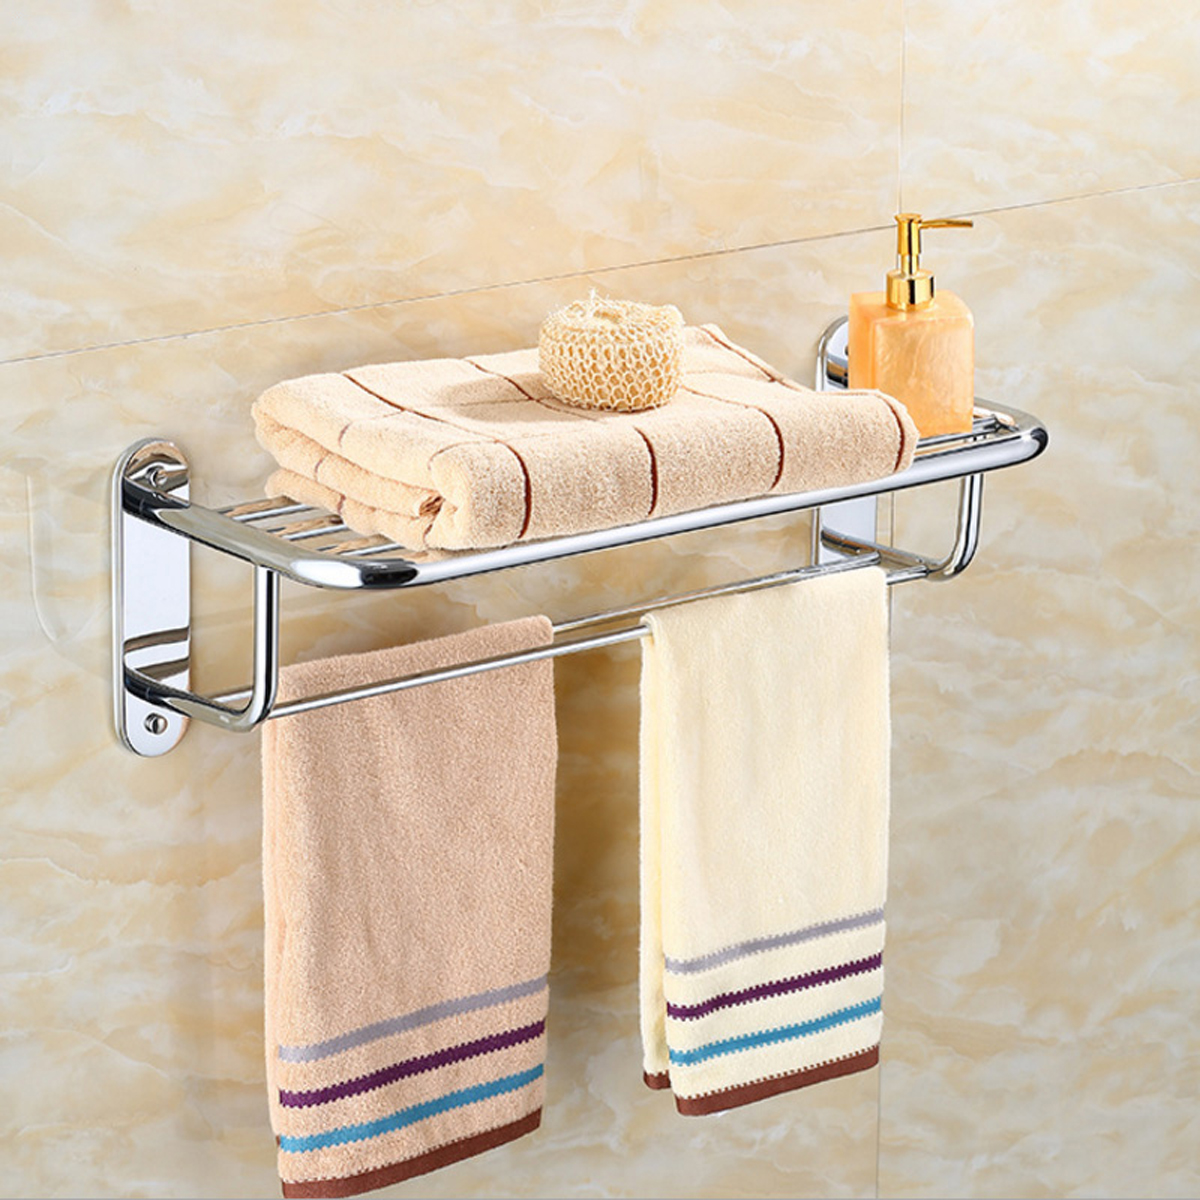 Chrome-Stylish-Bathroom-Wall-Mounted-Towel-Rail-Holder-Shelf-Storage-Rack-1258253-3